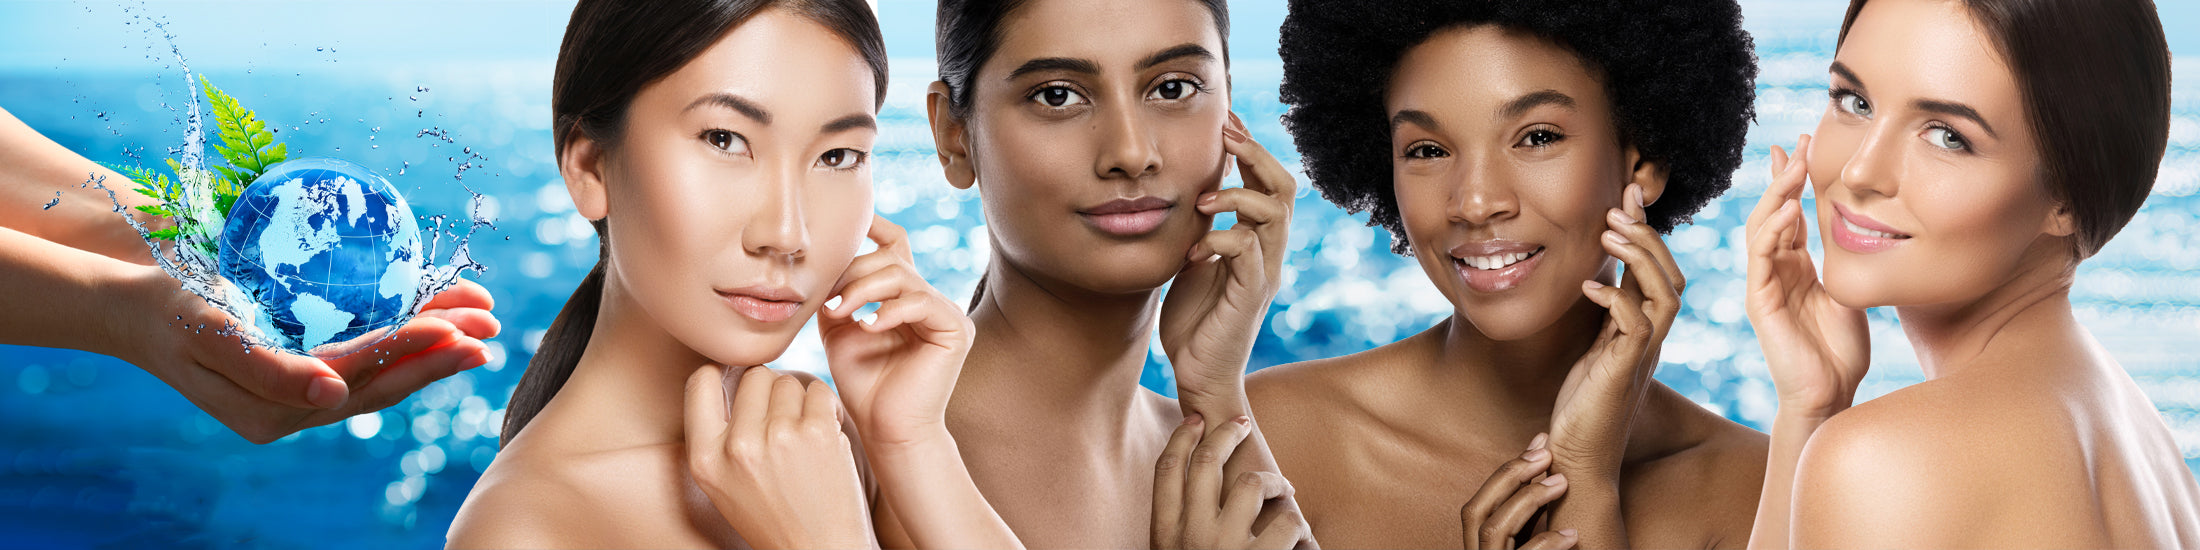 Natural Skin Care Facial Toners, Creams, Lotions and More